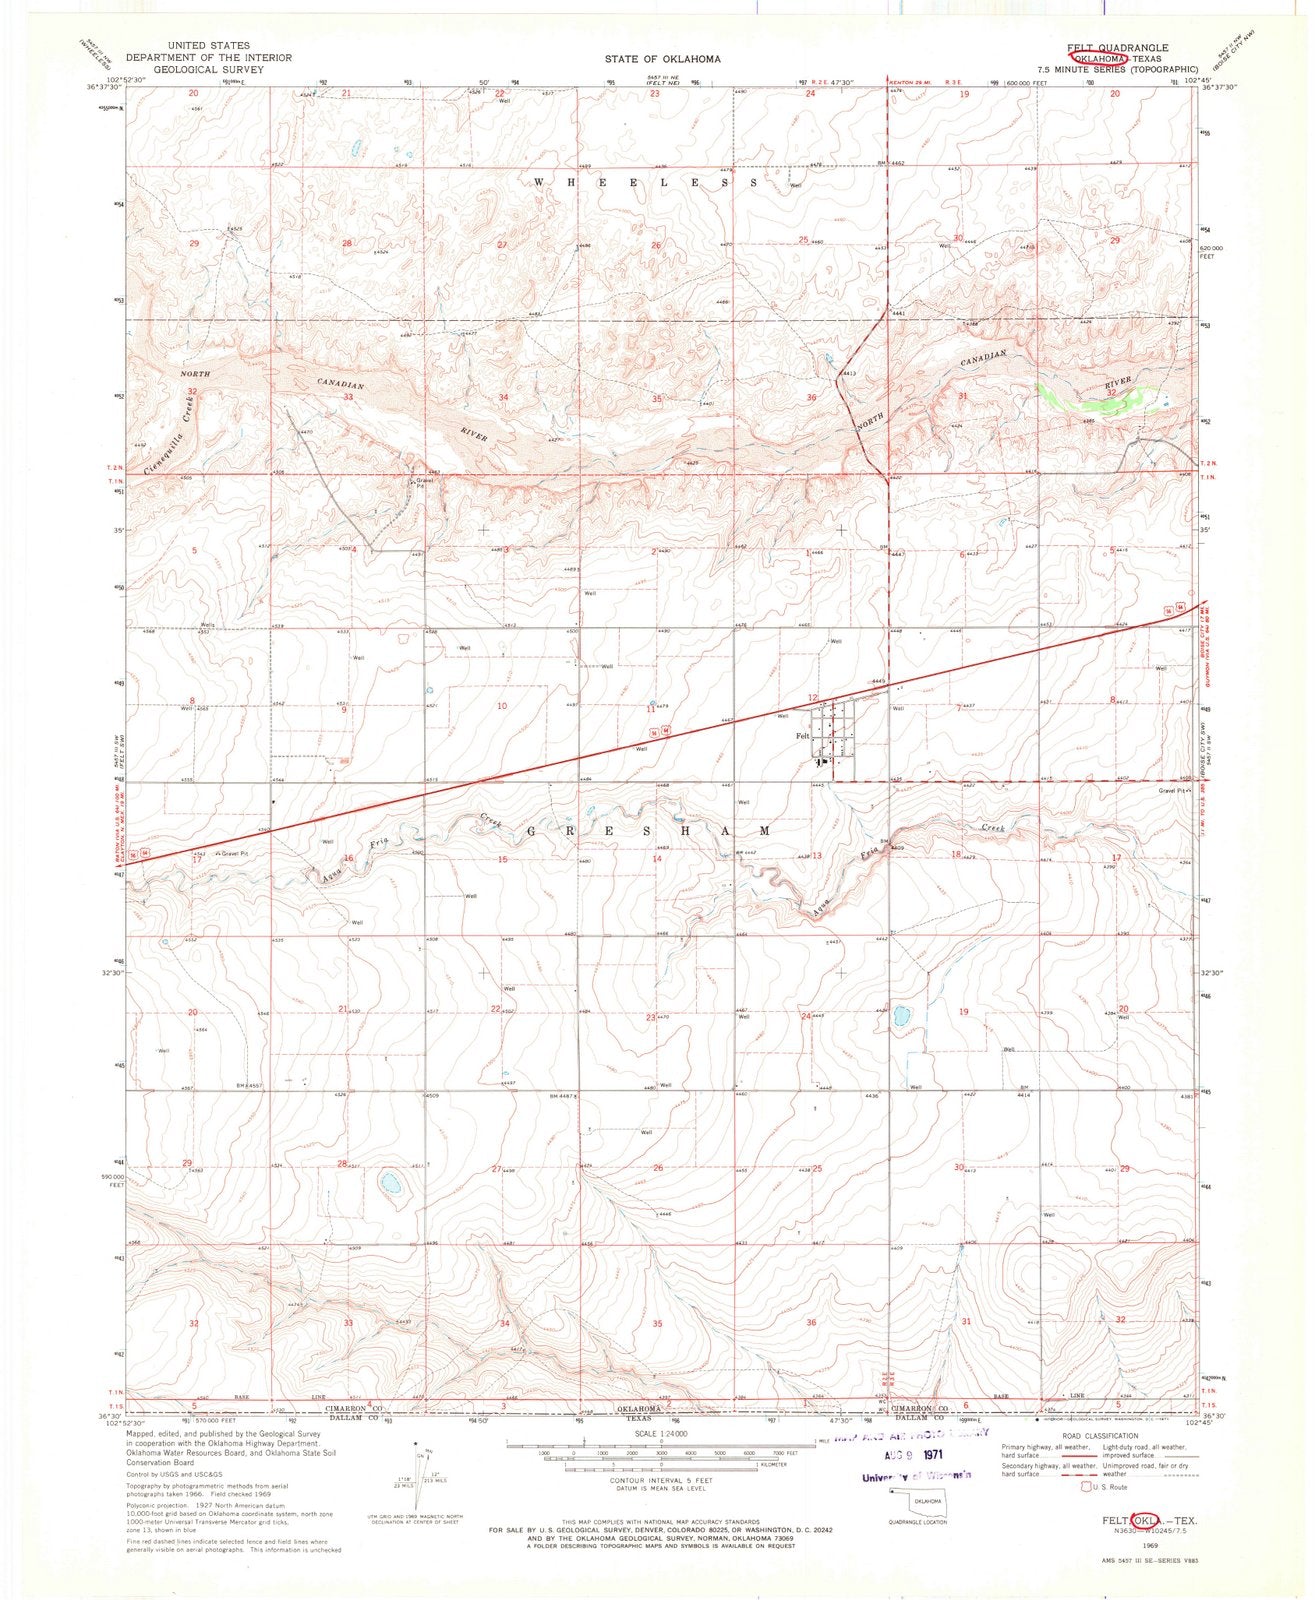 1969 Felt, OK - Oklahoma - USGS Topographic Map v3